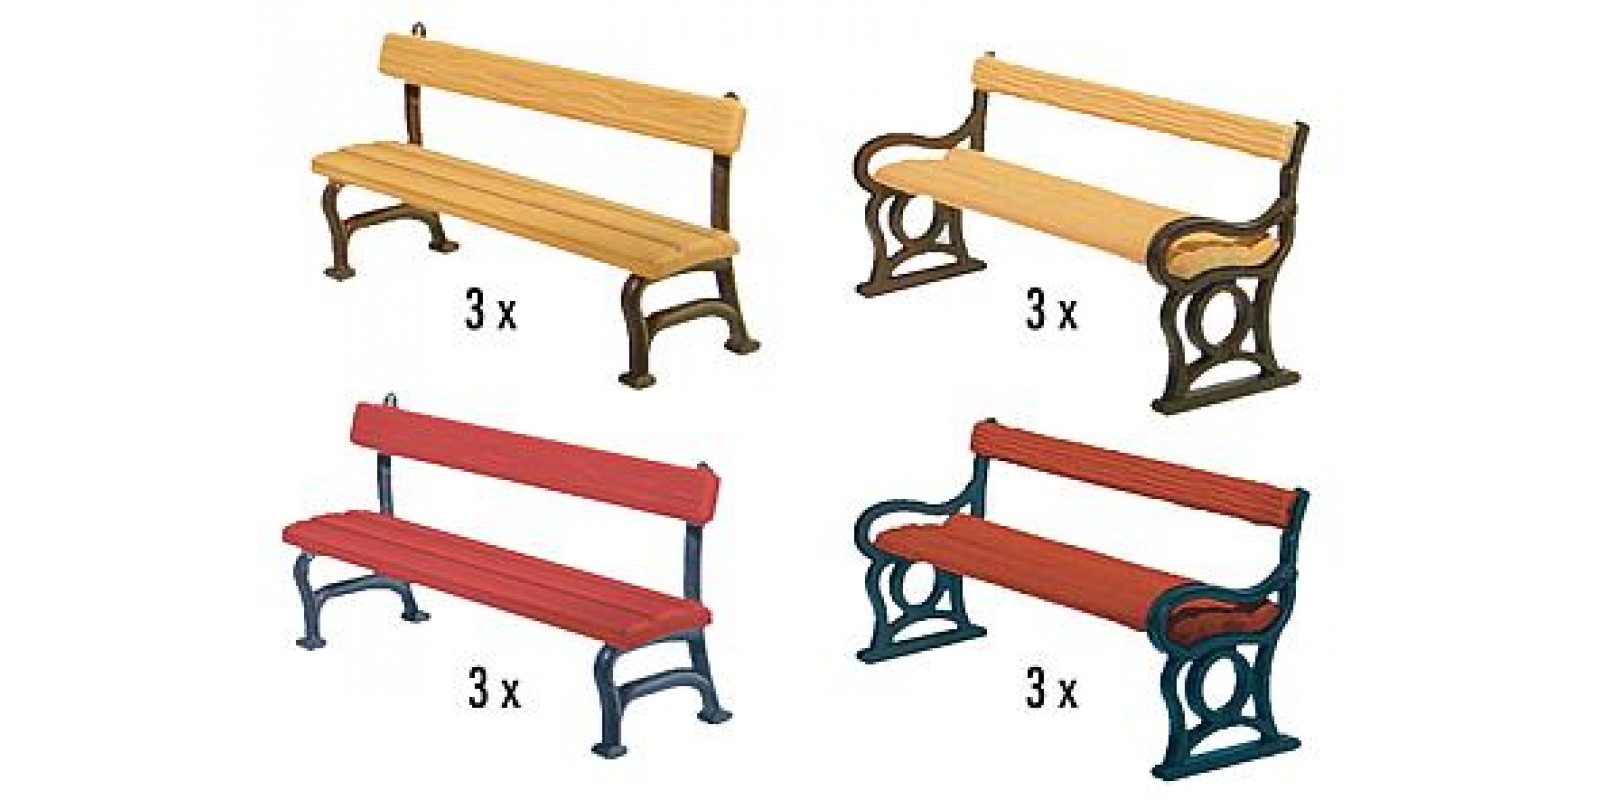 Fa180443 	 12 Park benches